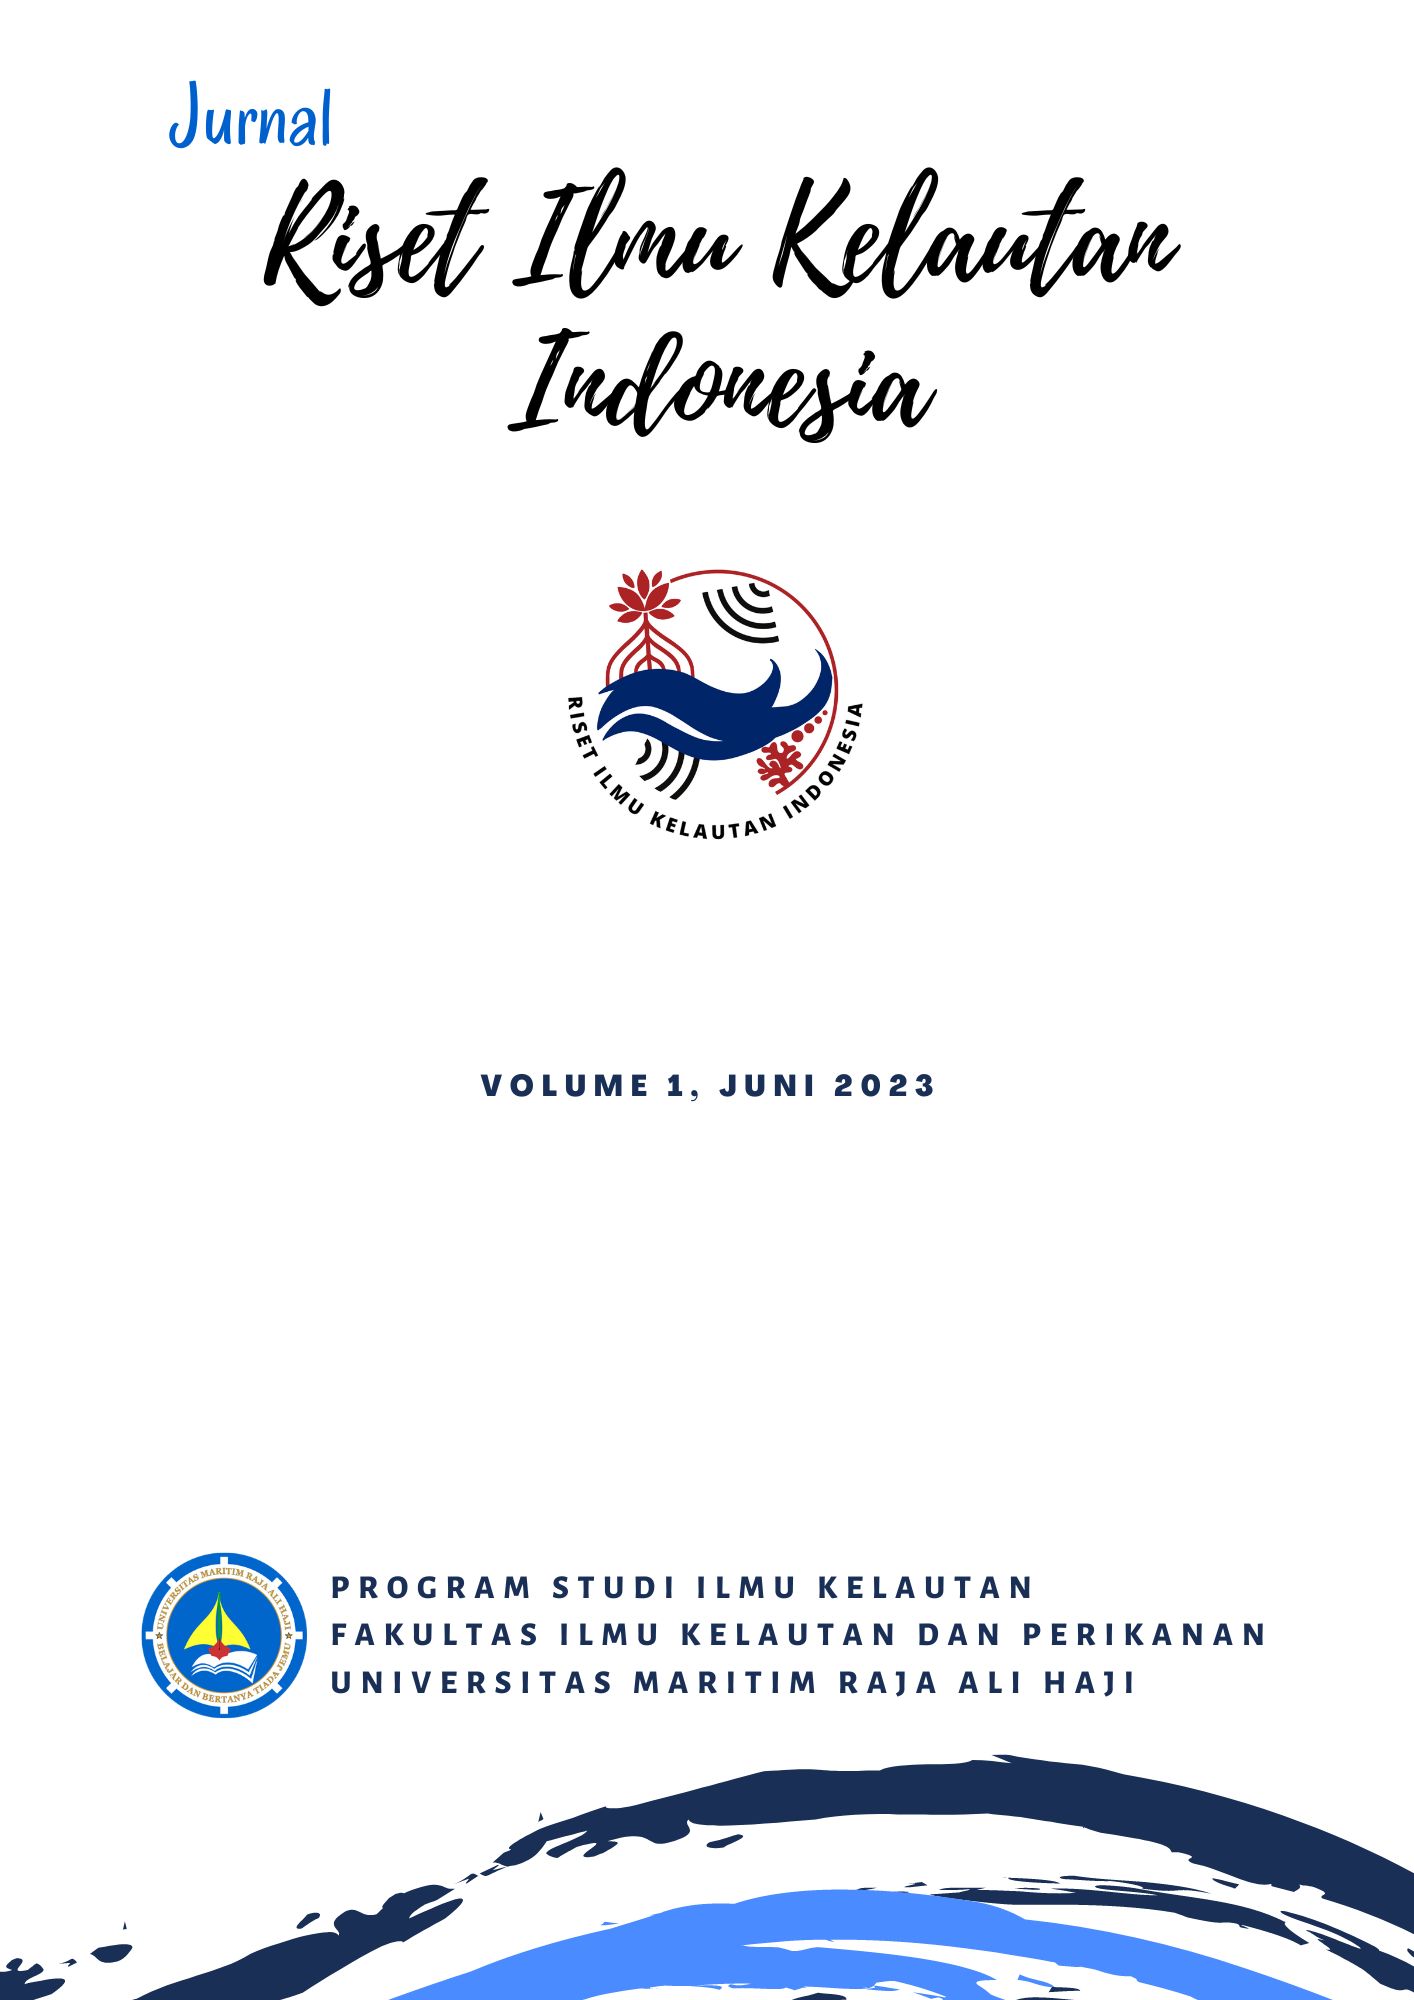 					Lihat Vol 1 No 1 (2023): Jurnal Riset Ilmu Kelautan Indonesia Vol.1 (Juni 2023)
				